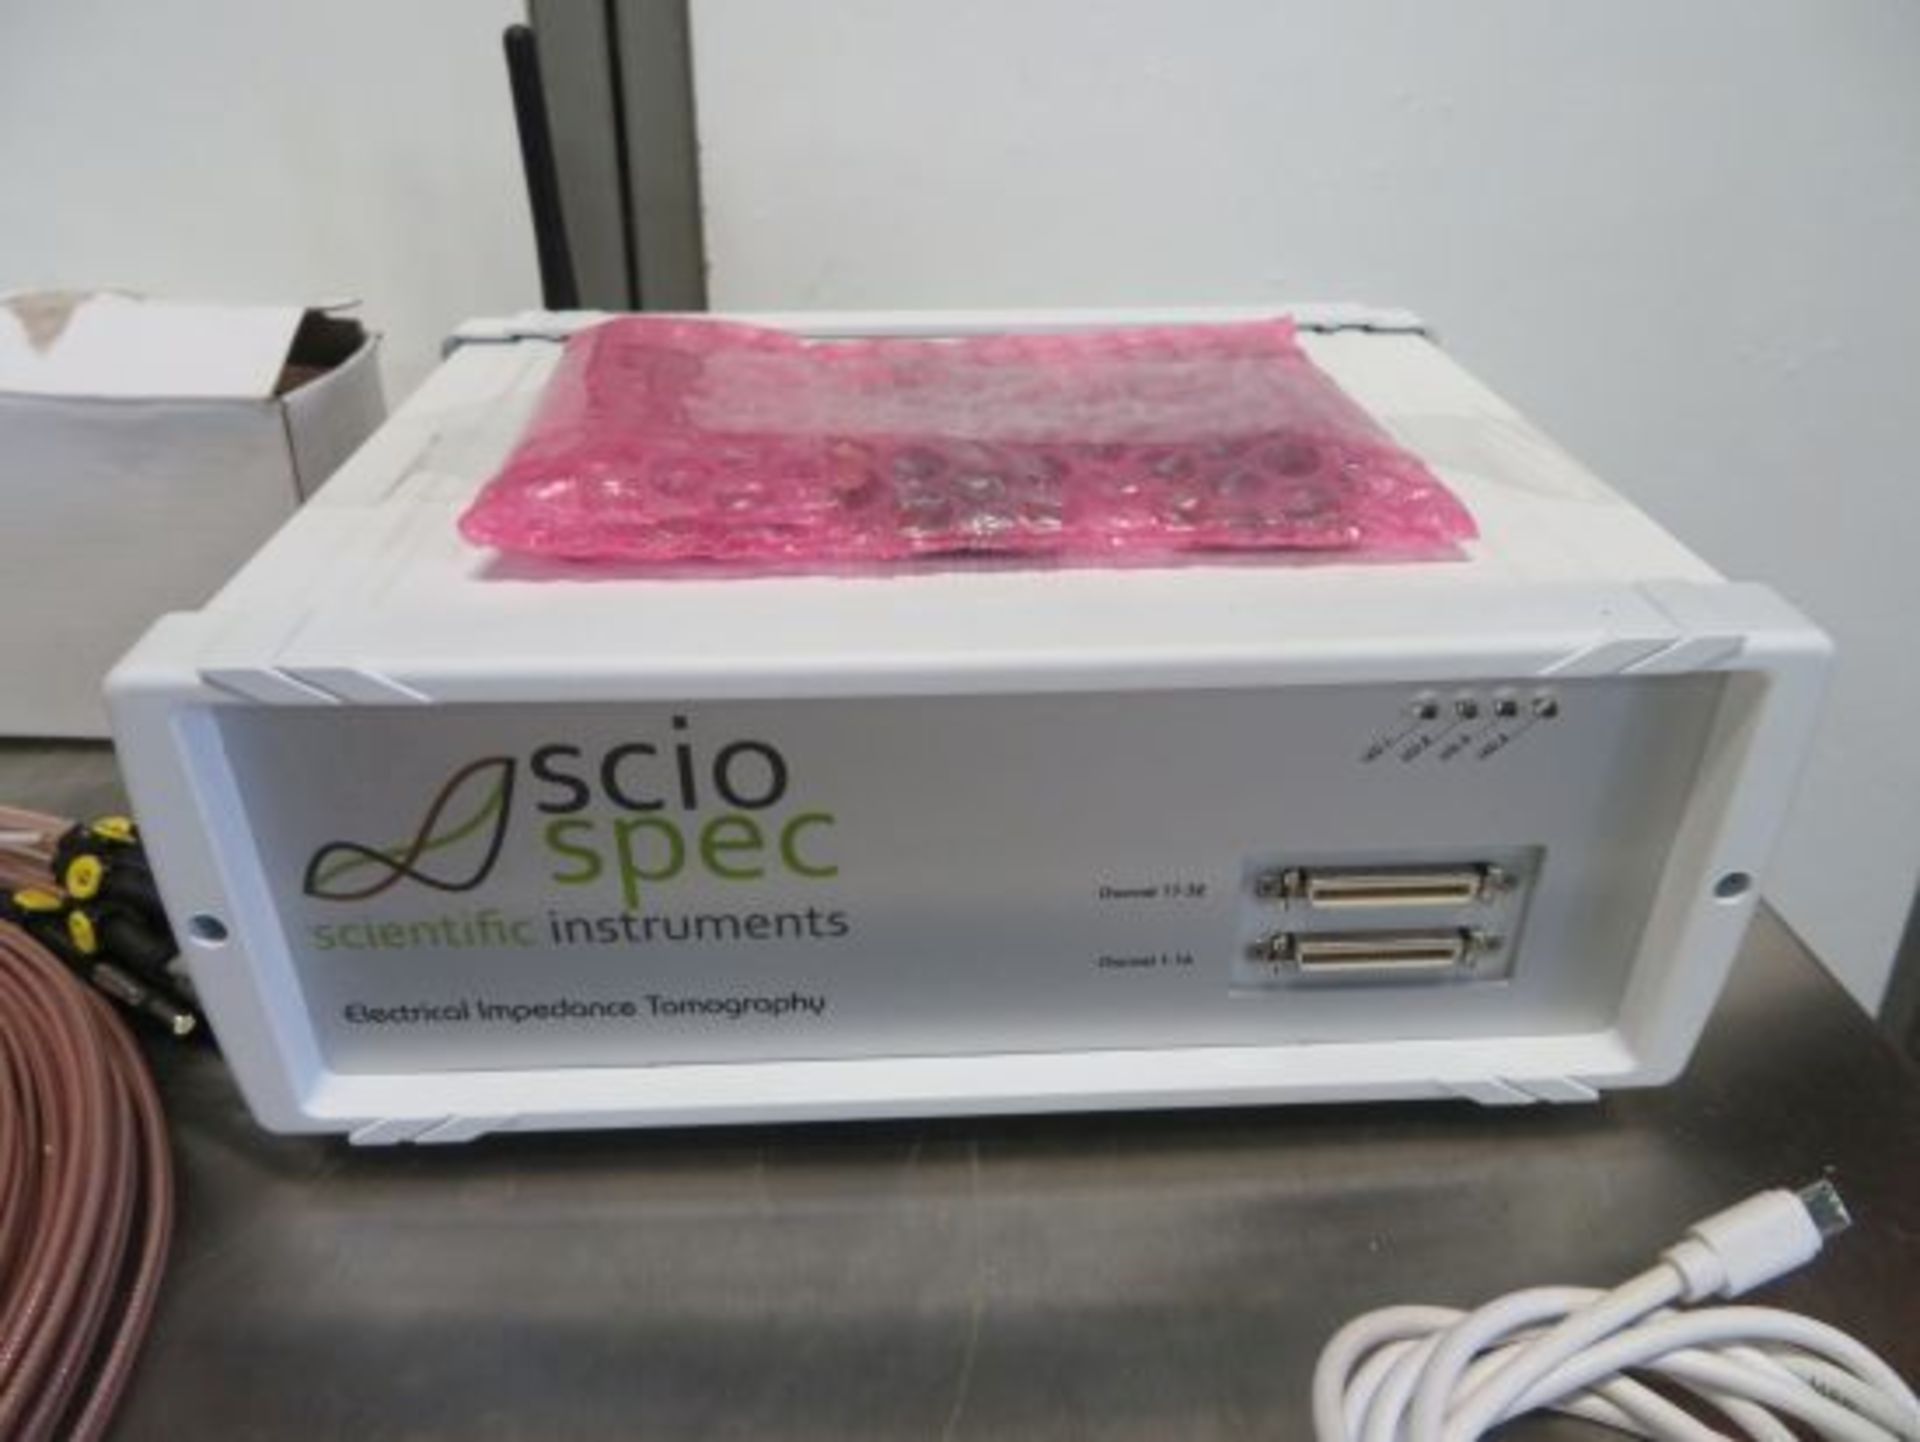 Scio Spec Scientific Instruments Electrical Impedance Tomography (E.I.T) Unit, Serial No 01-0019- - Image 2 of 3